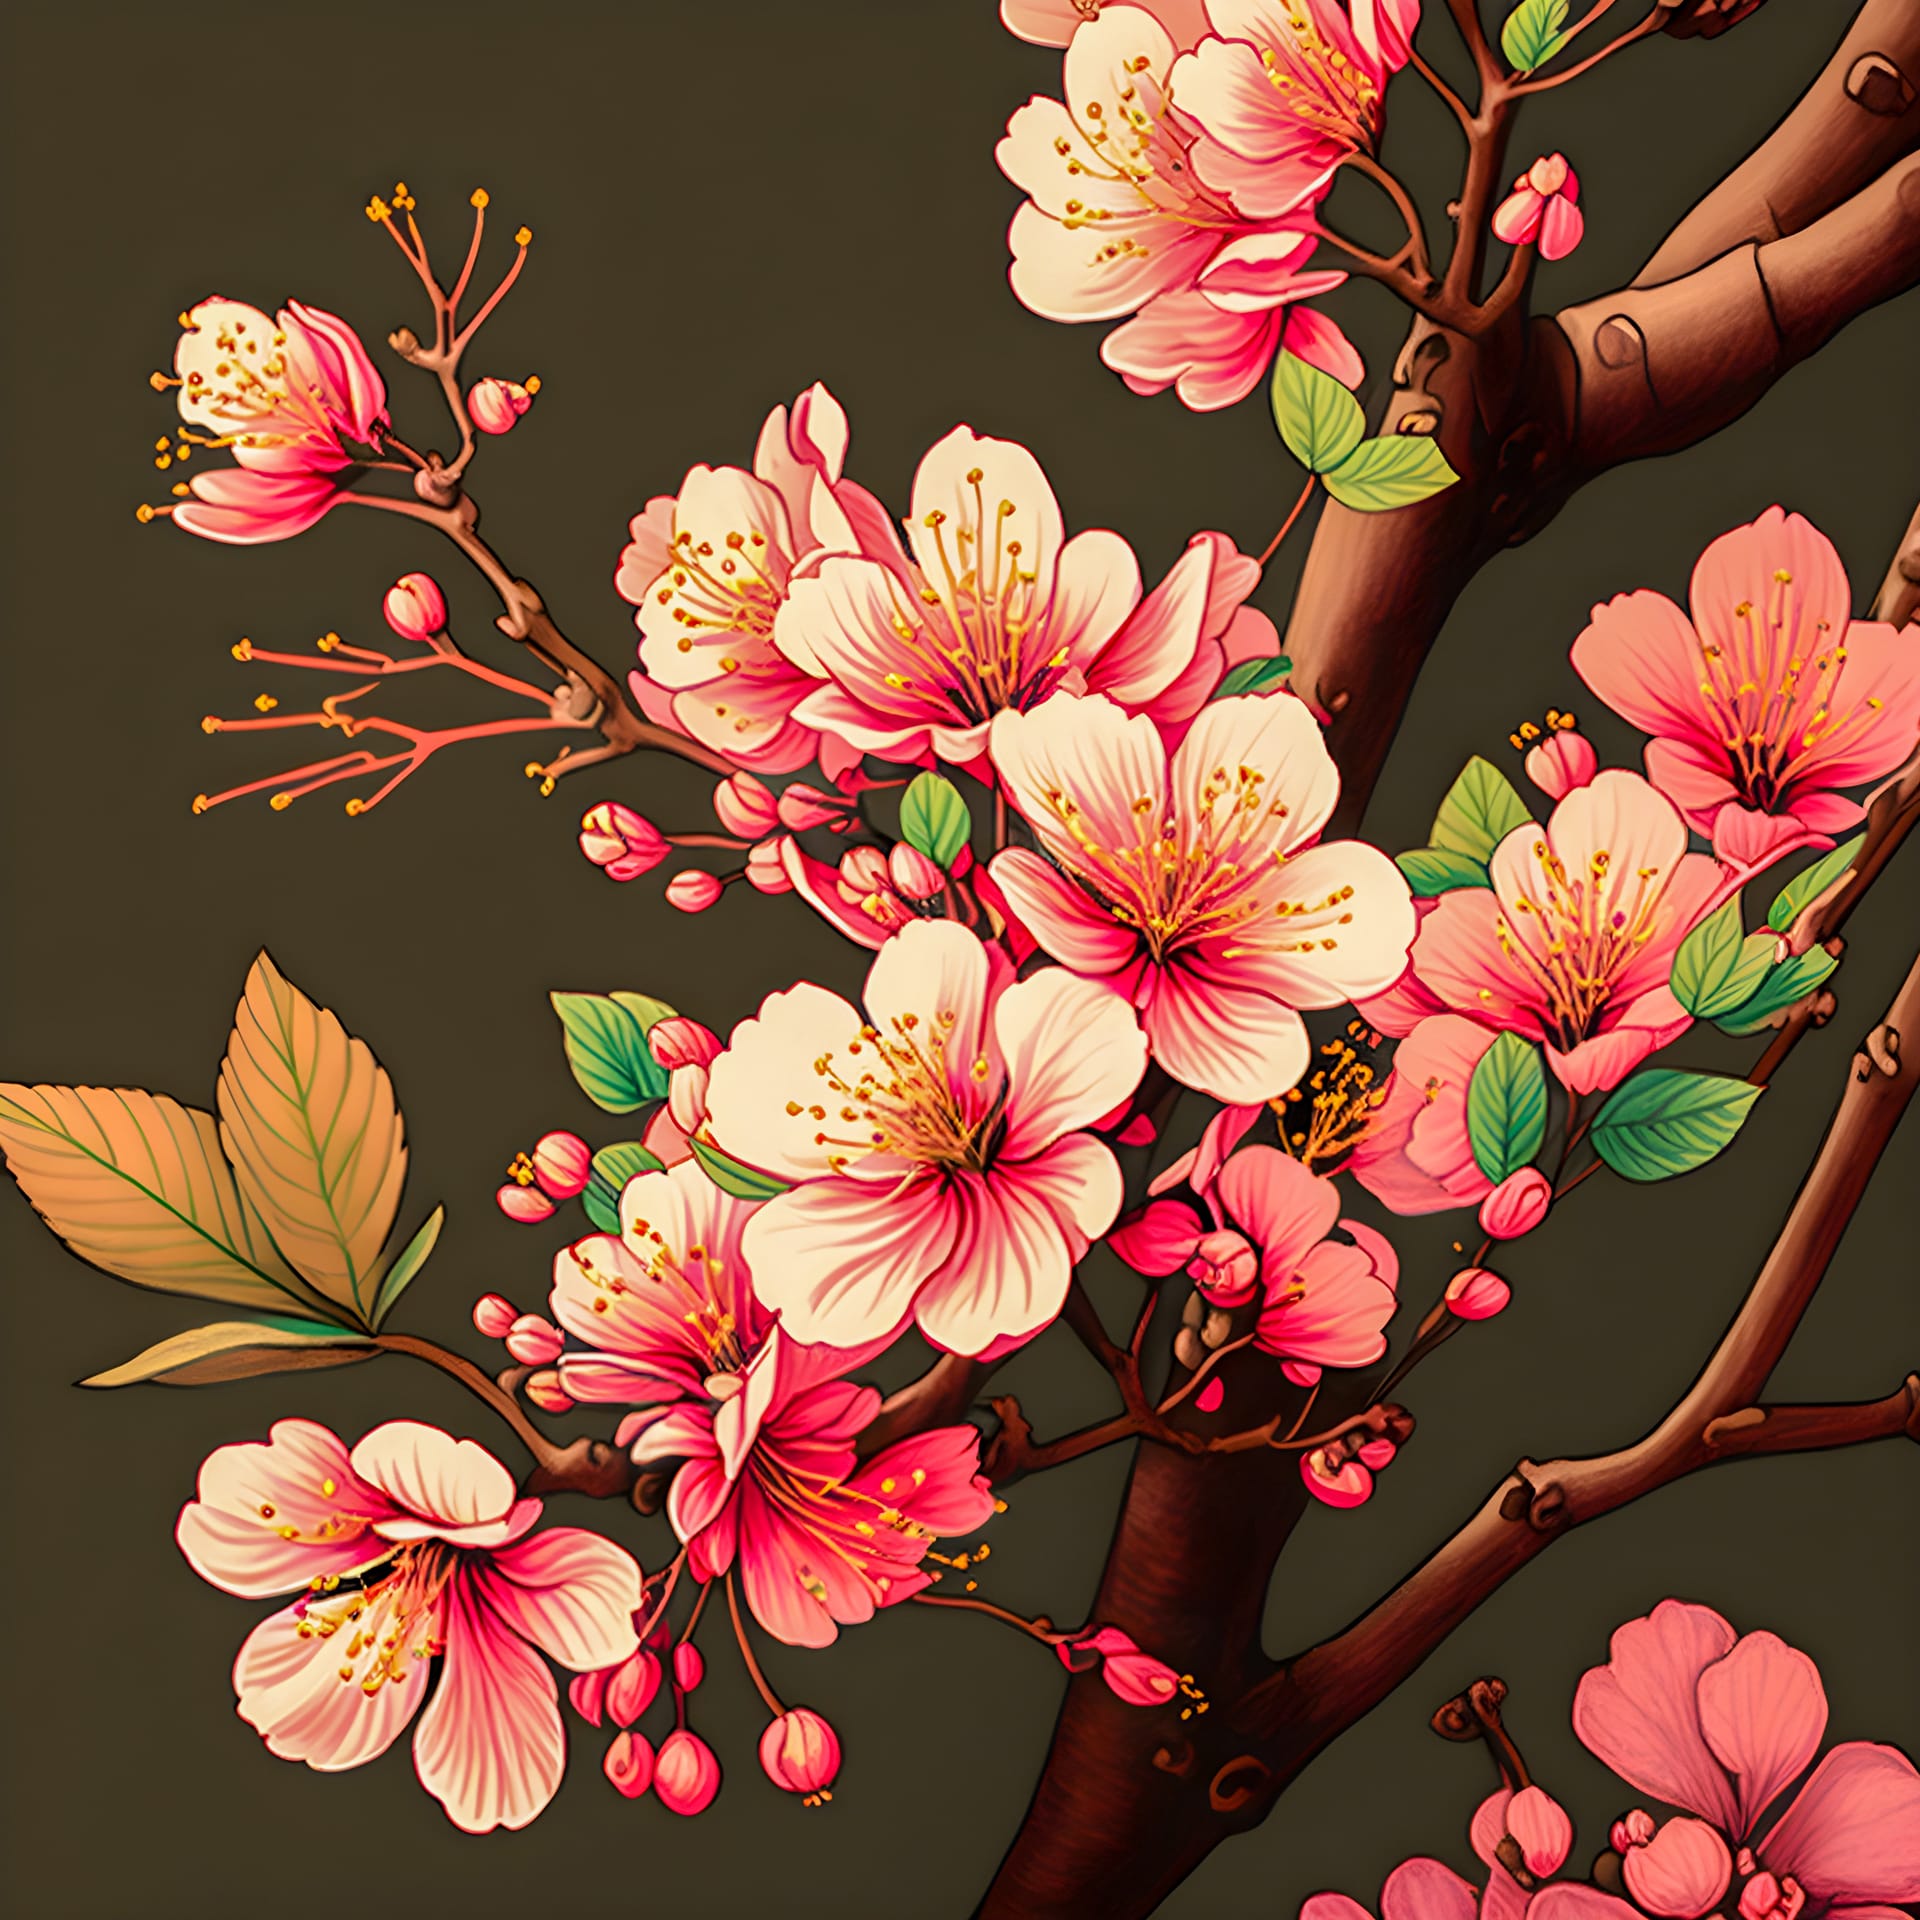 Cherry blossom tree hand drawn illustration flower profile pic